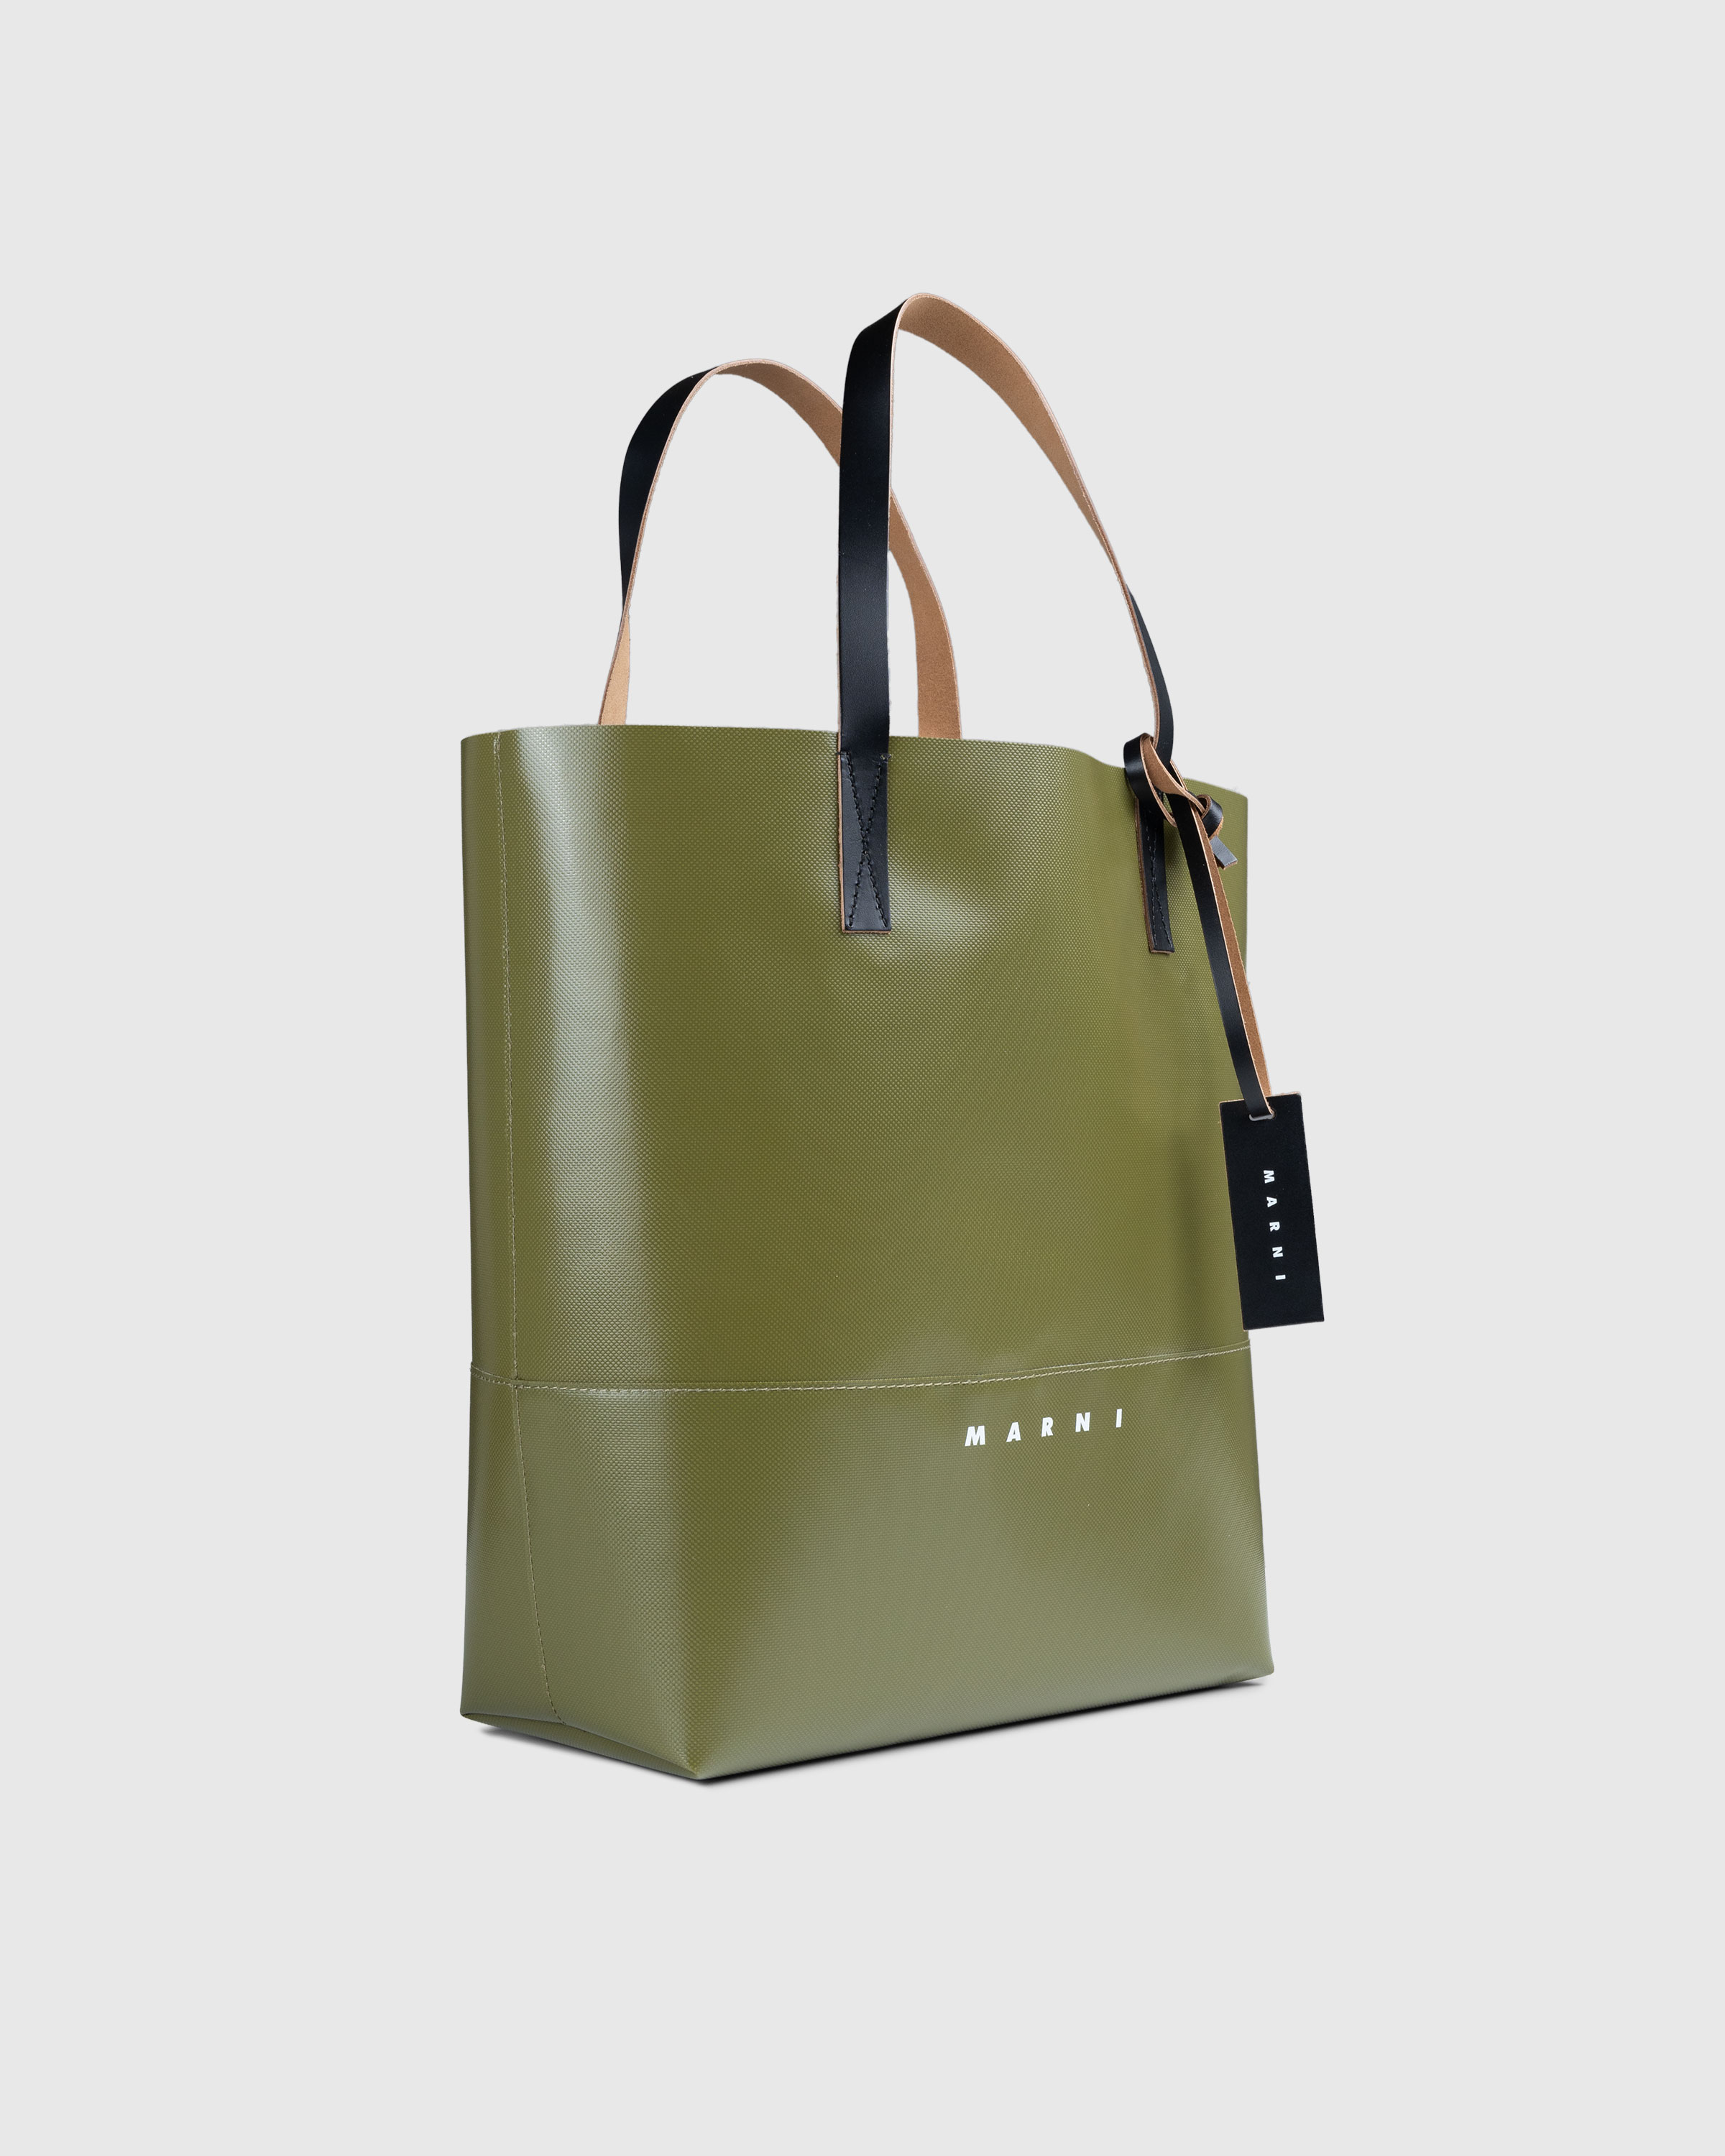 Marni - Tote Bag Olive Green - Accessories - Green - Image 2